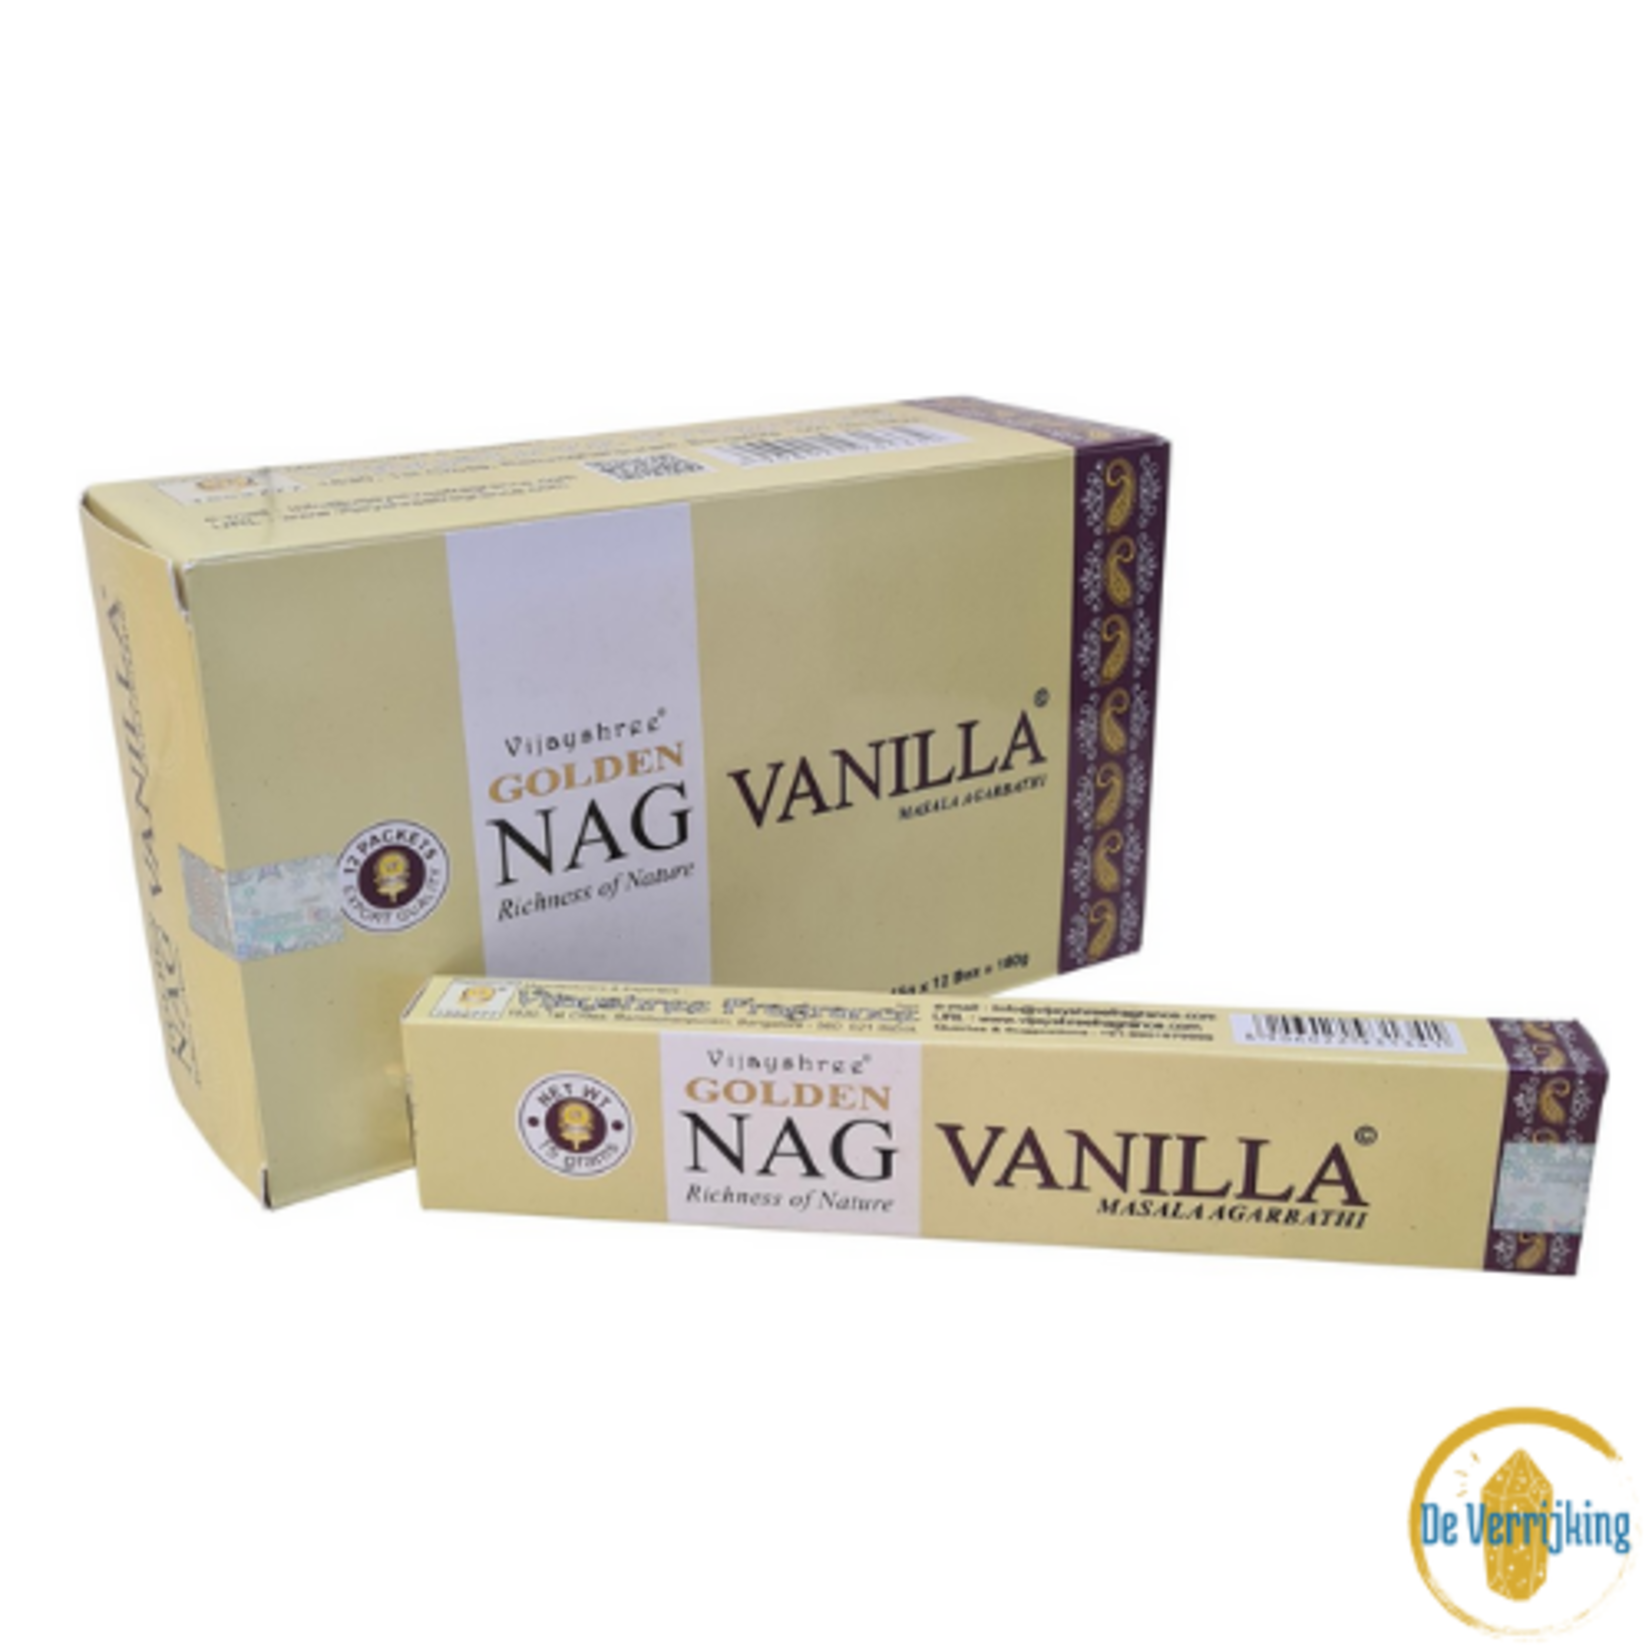 Golden Nag Golden Nag Vanilla Incense 15 grams